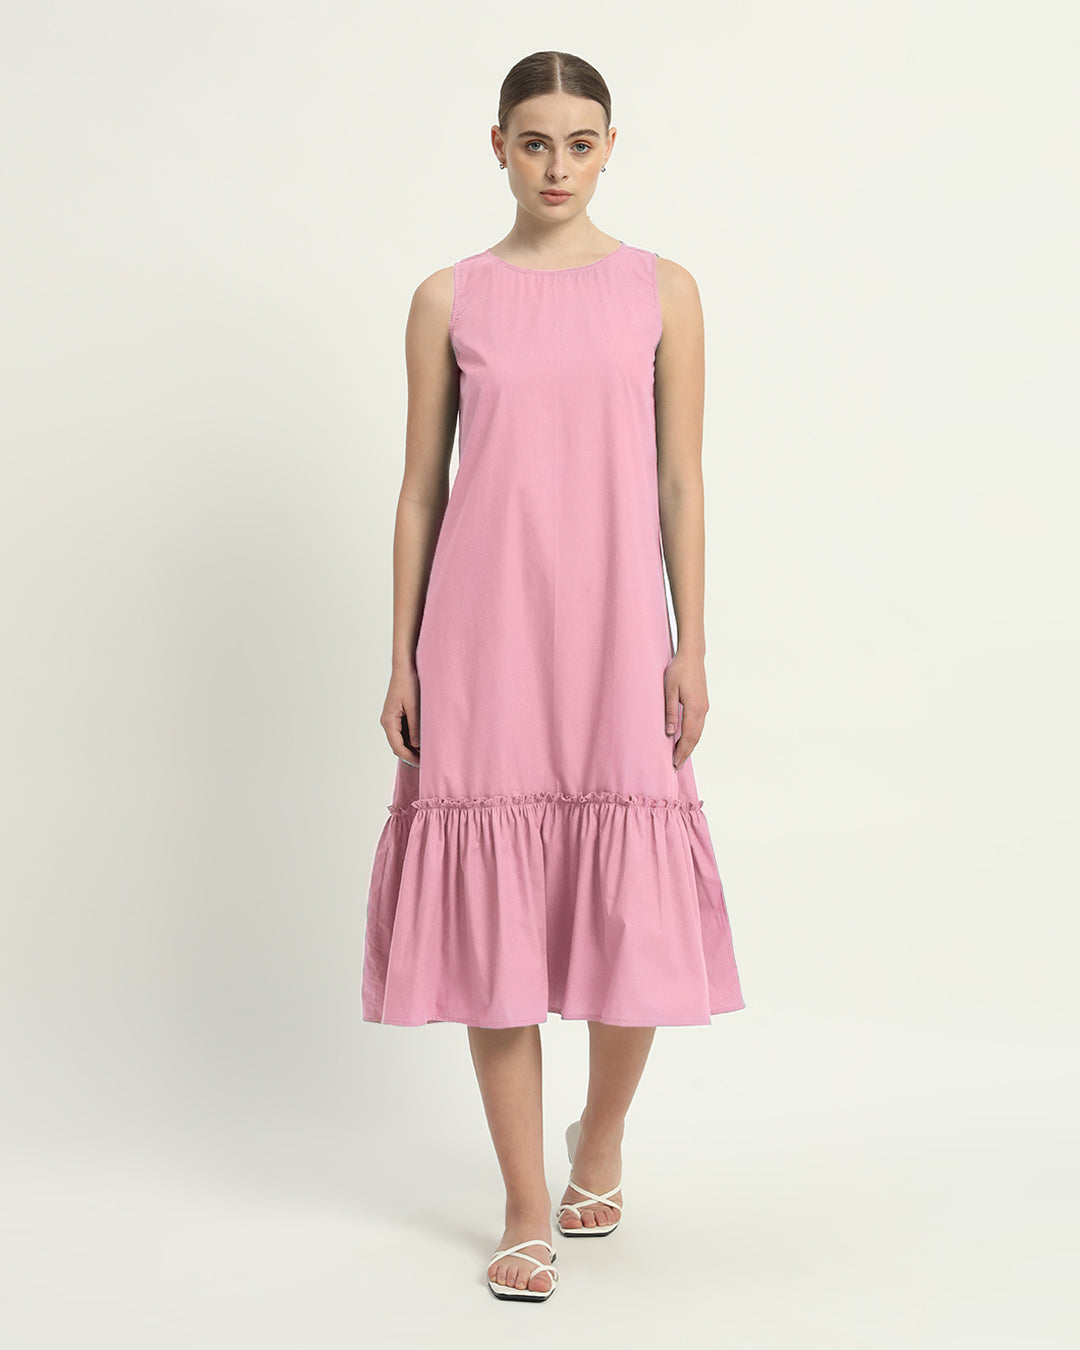 The Fondant Pink Millis Cotton Dress